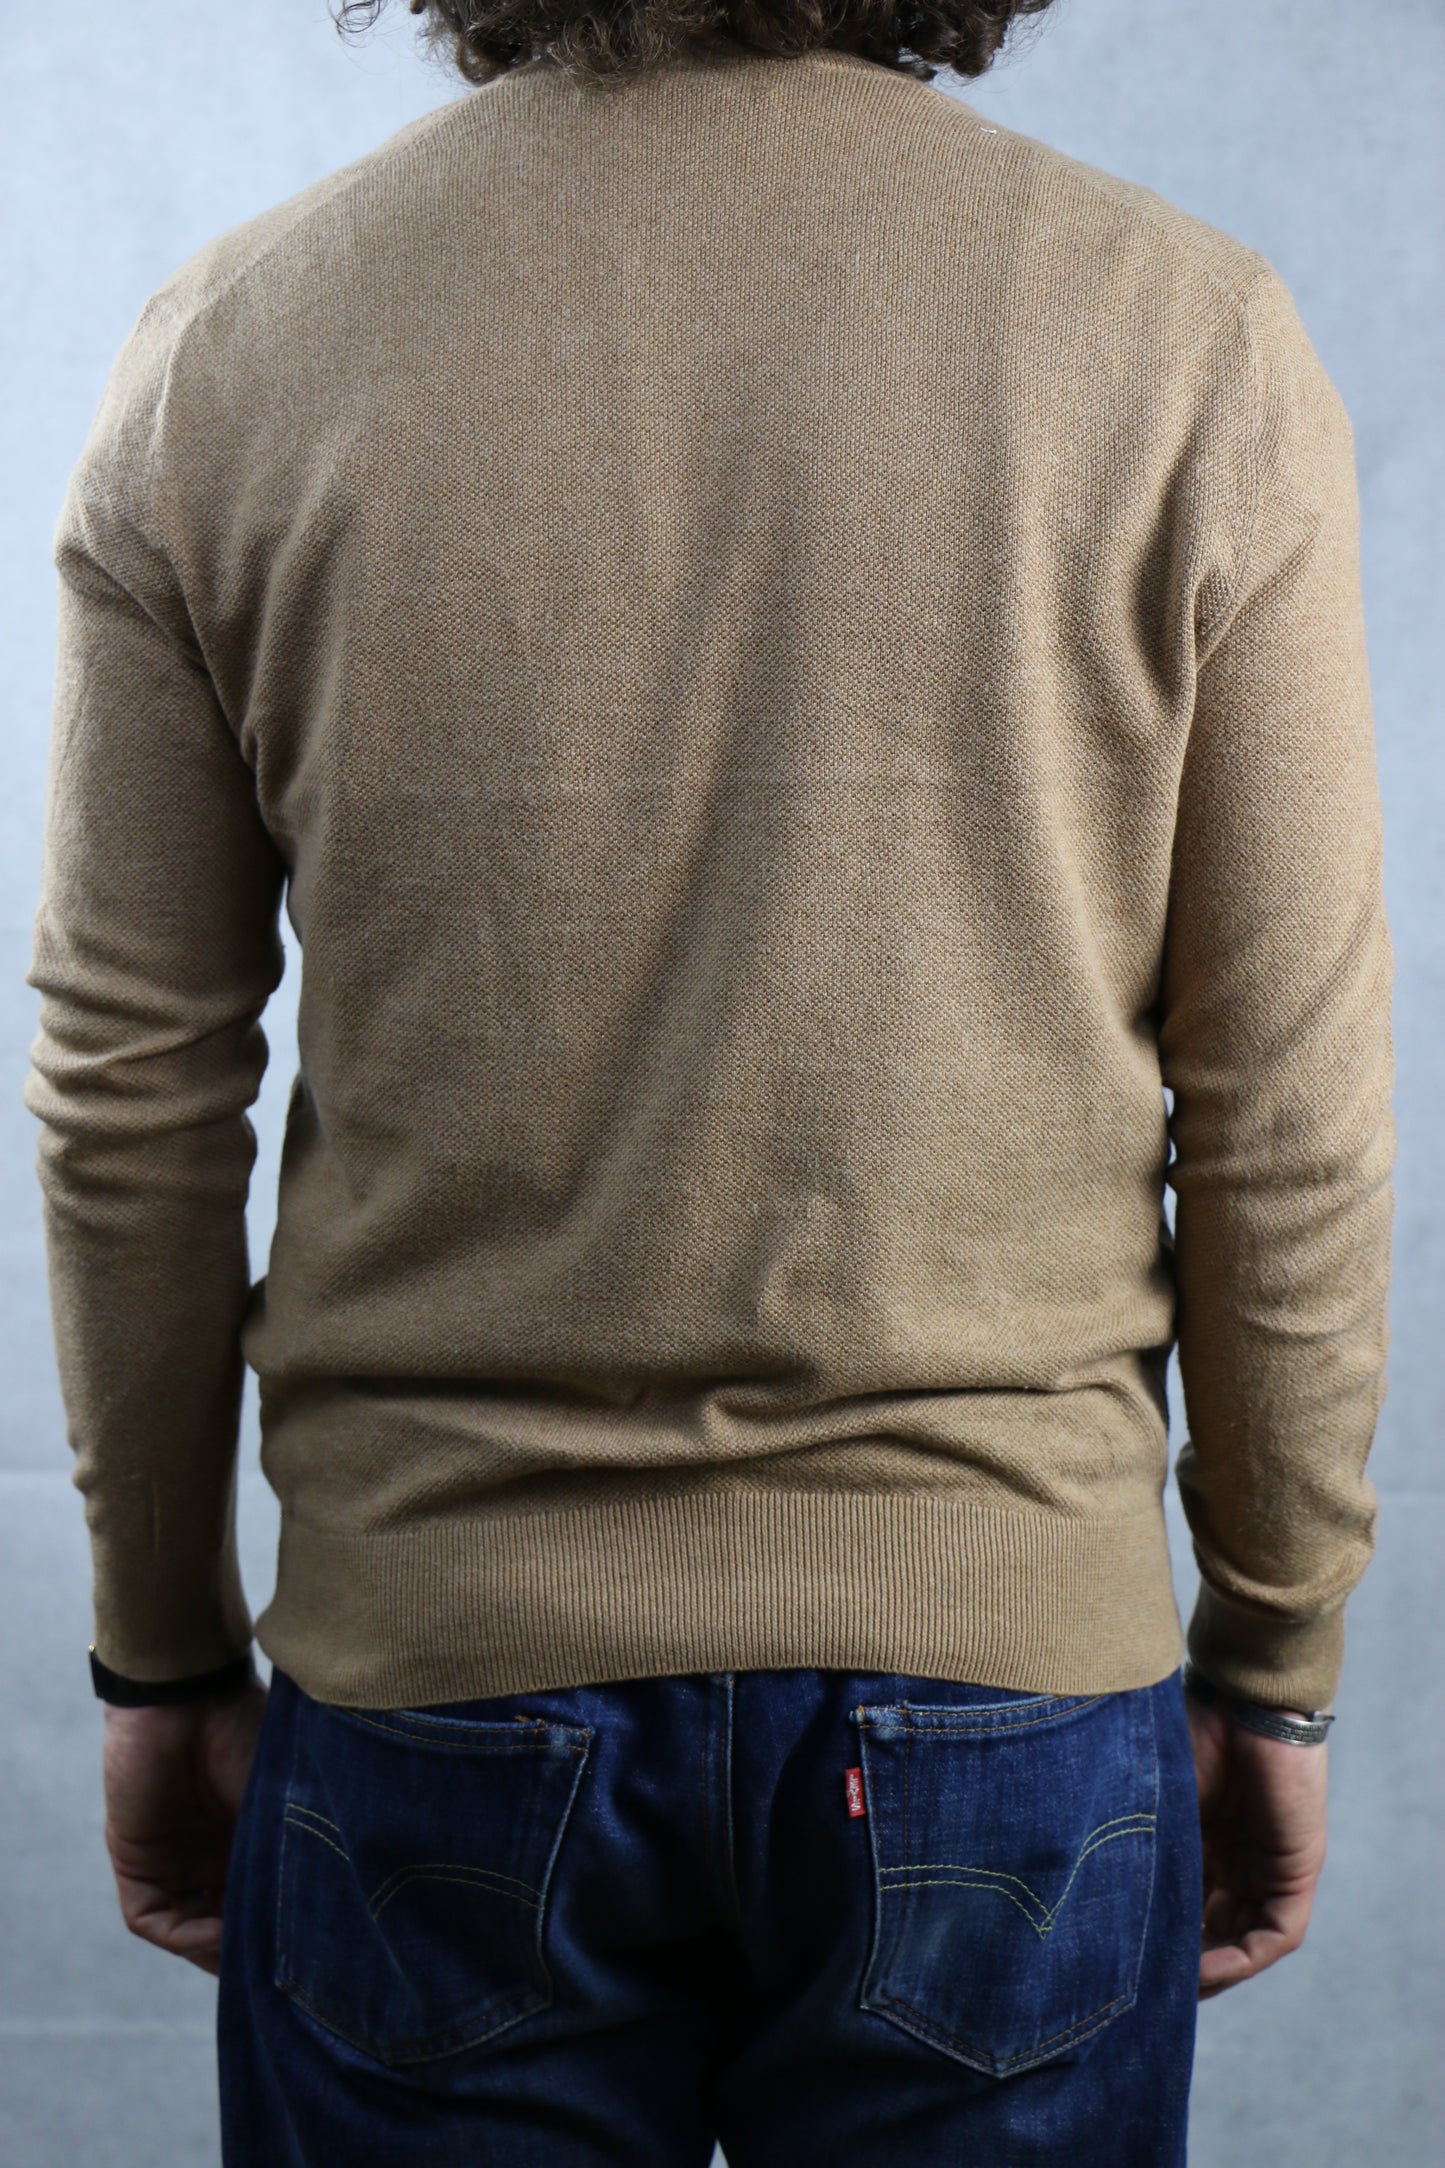 Polo Ralph Lauren Beige Sweater - vintage clothing clochard92.com